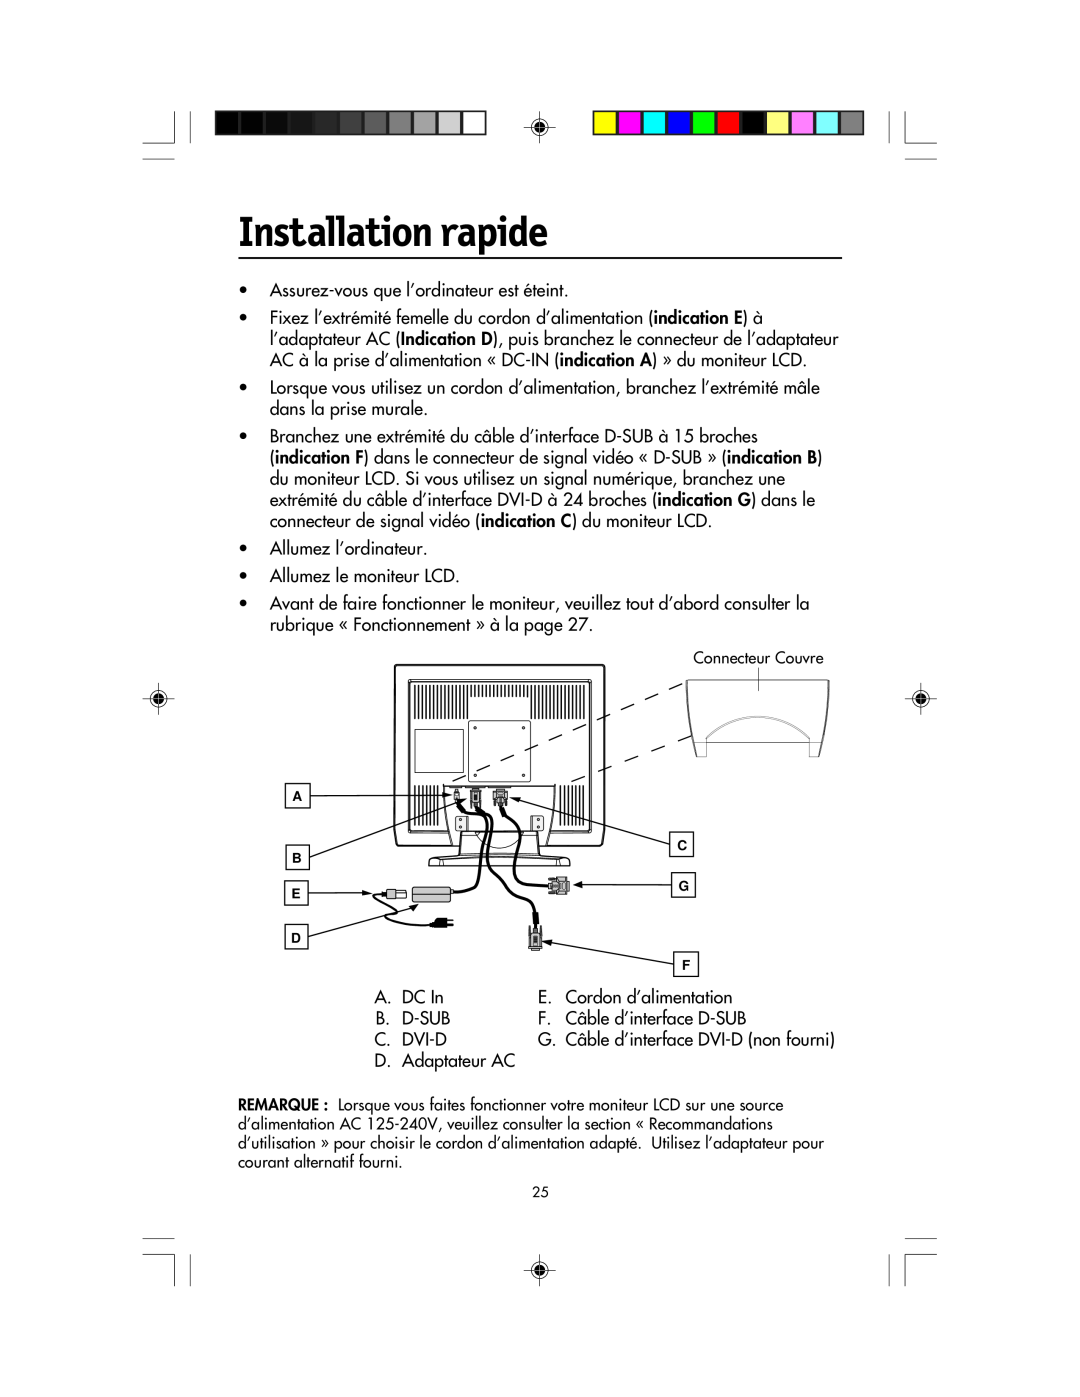 NEC LCD1920NX manual Installation rapide, Connecteur Couvre 